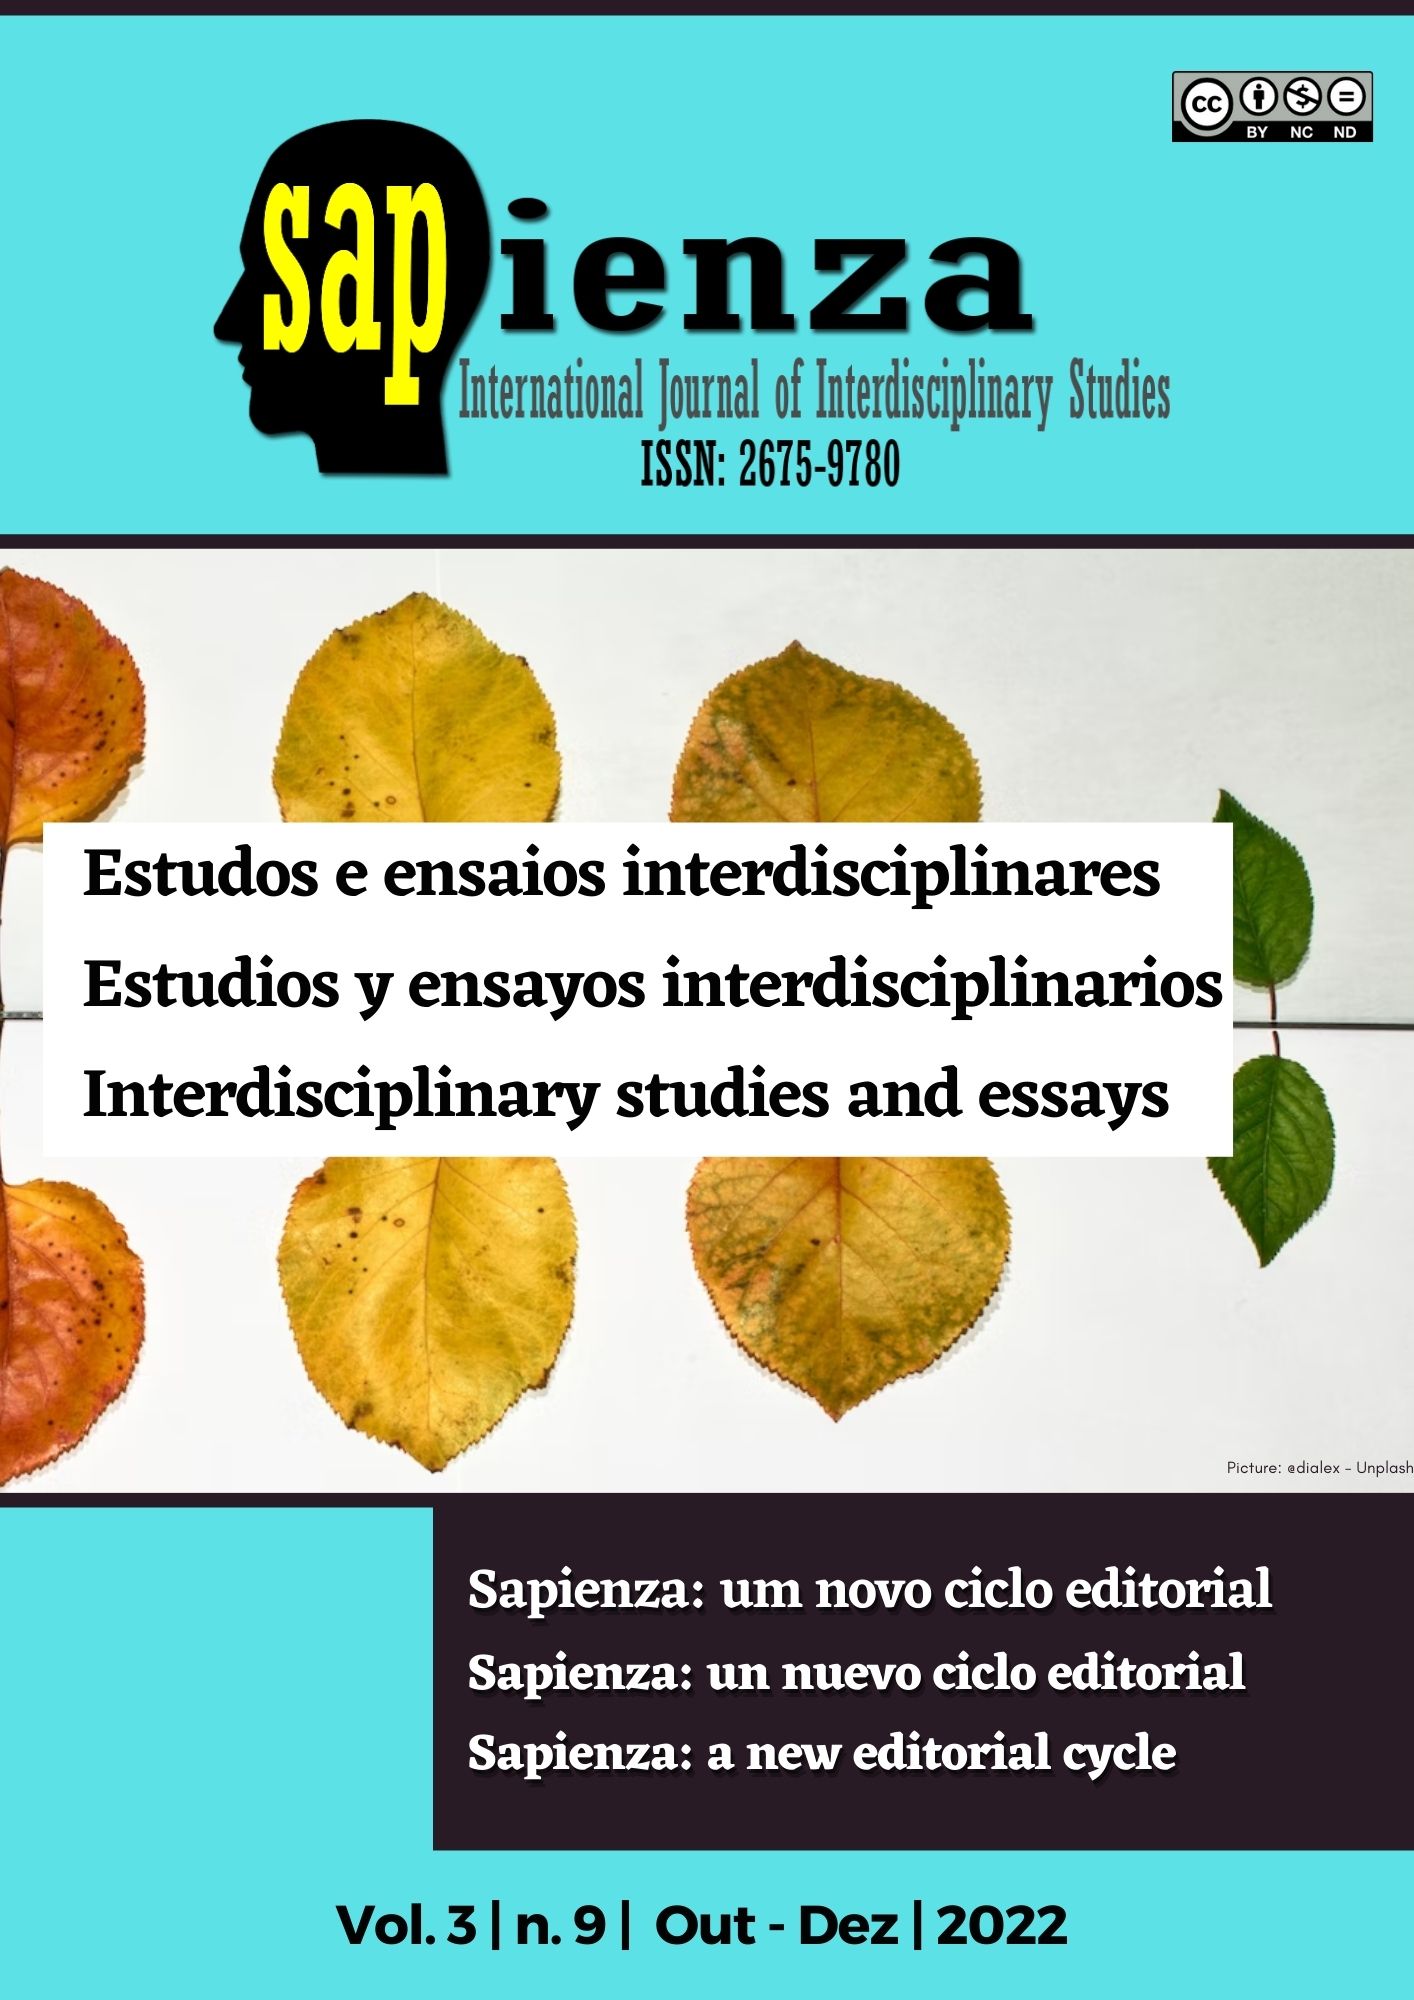 					View Vol. 3 No. 9 (2022): Sapienza: a new publishing cycle
				